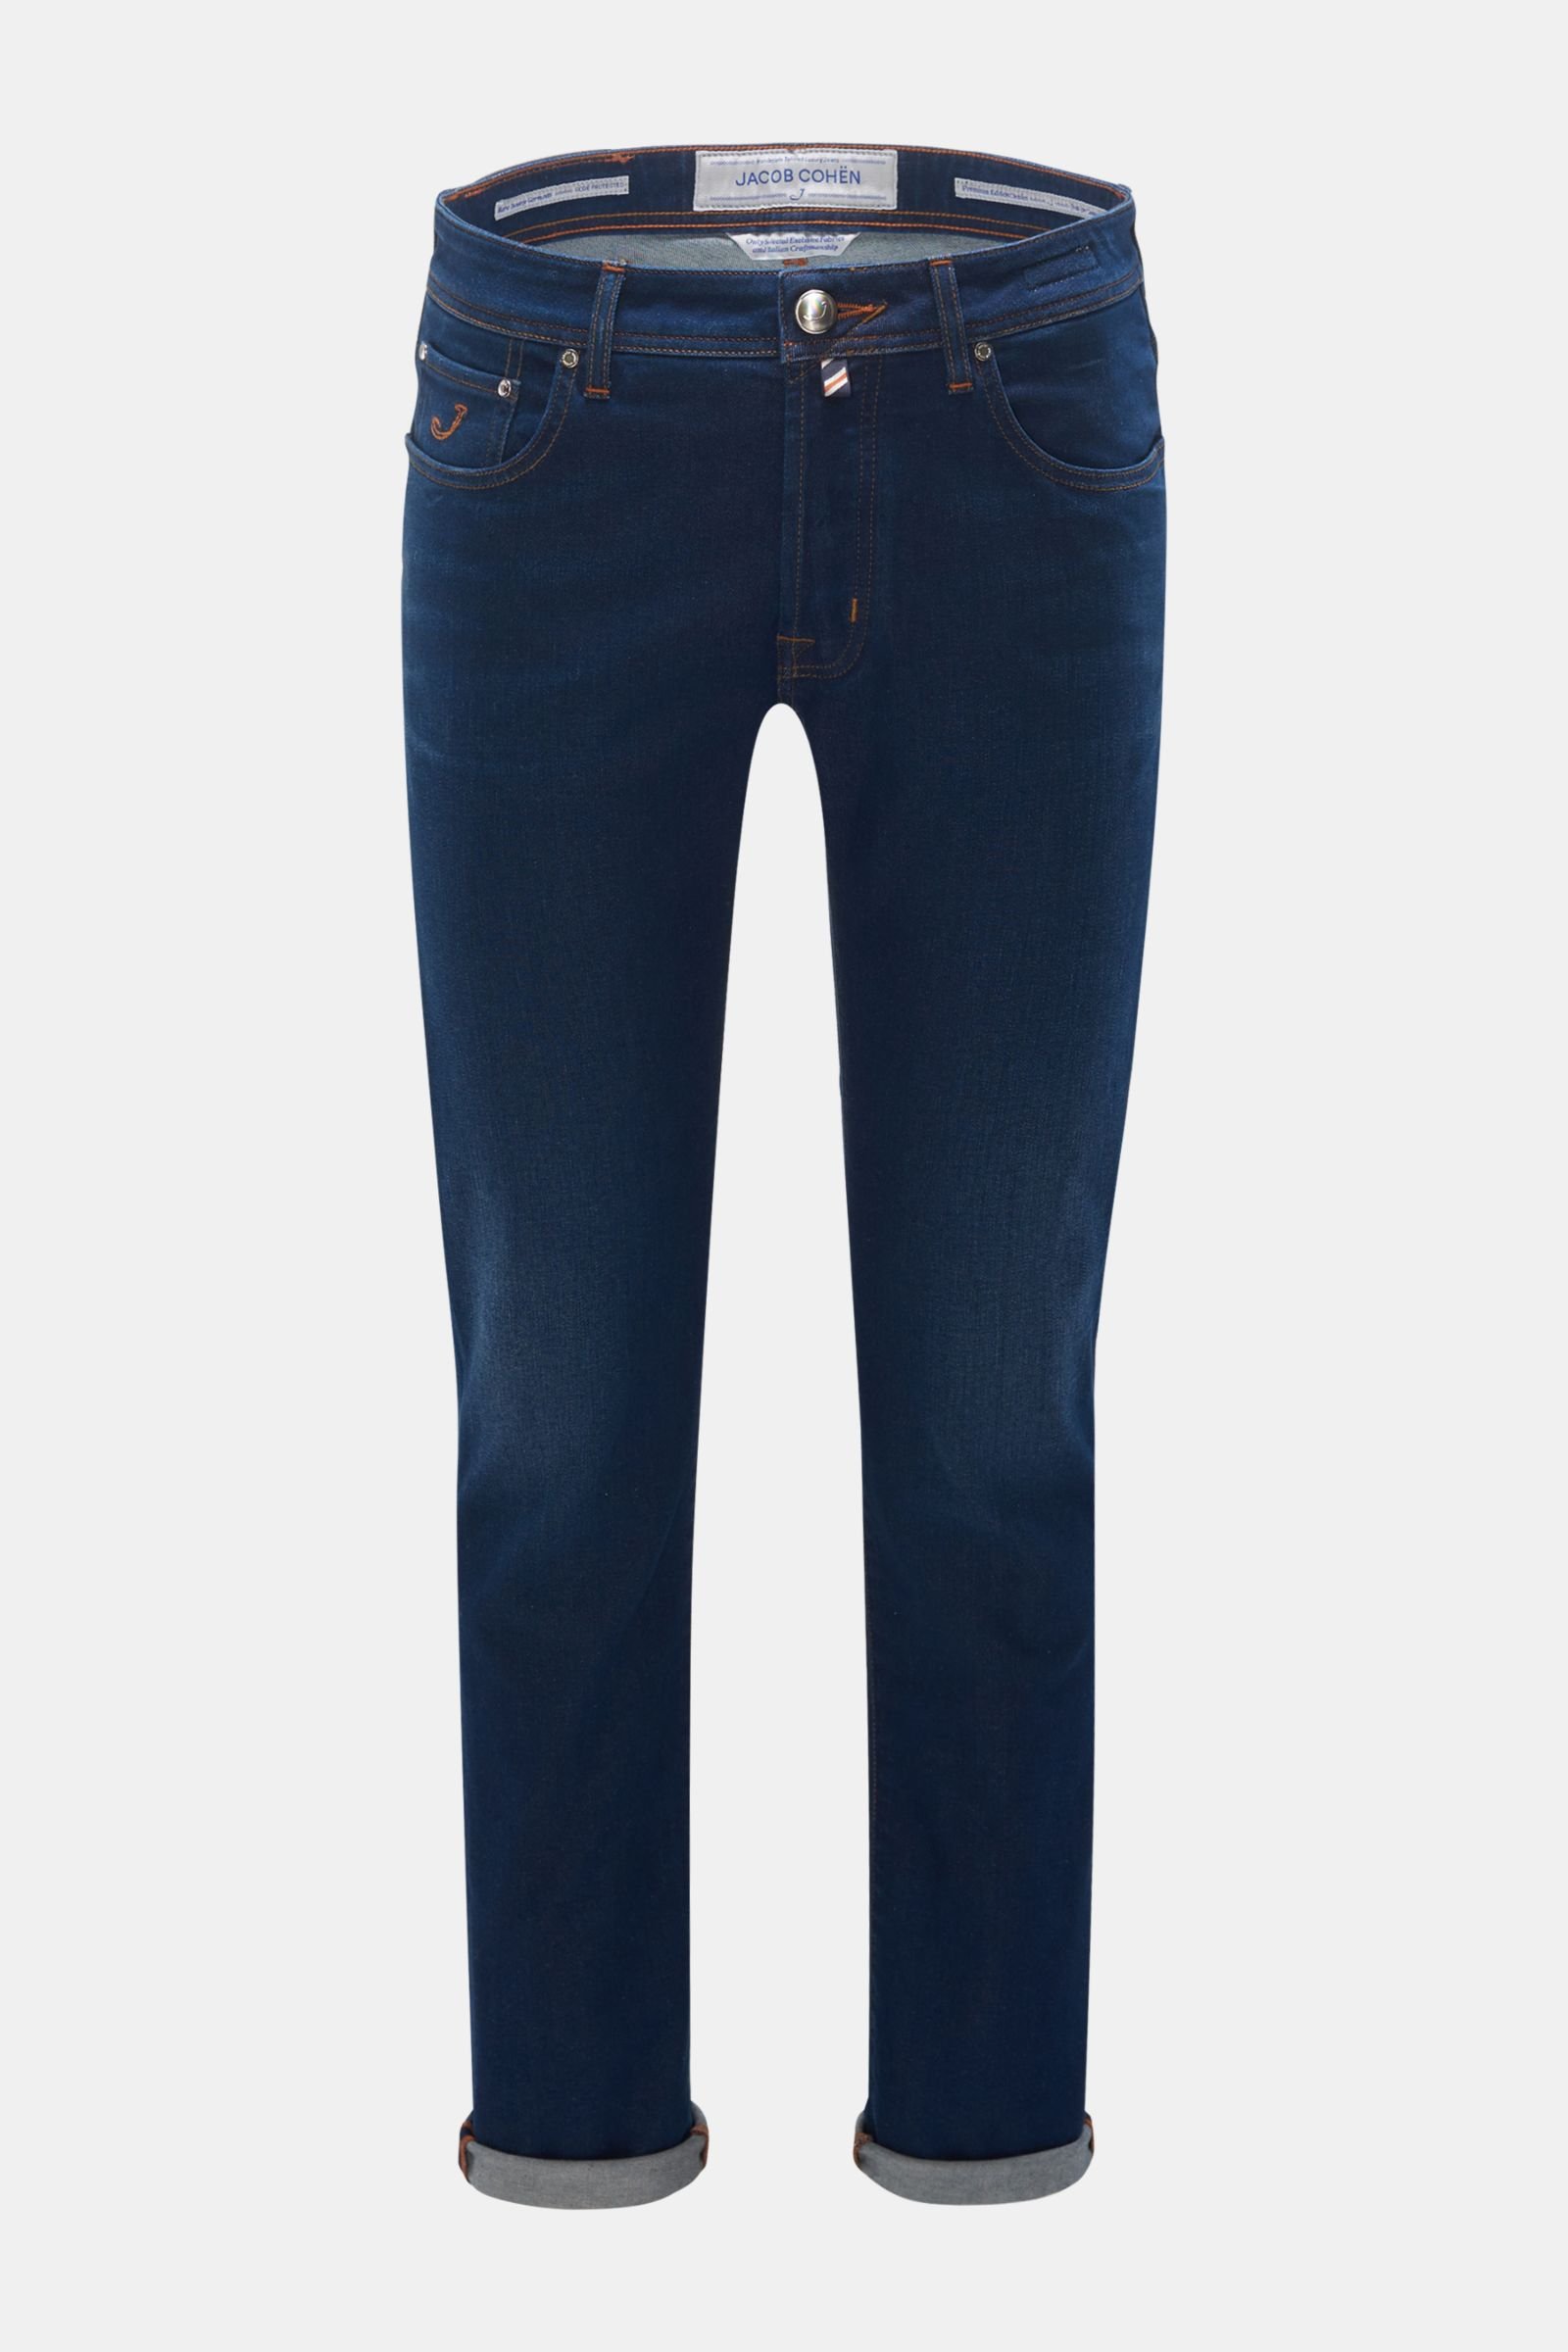 Jeans 'J688 Comfort Extra Slim Fit' navy 